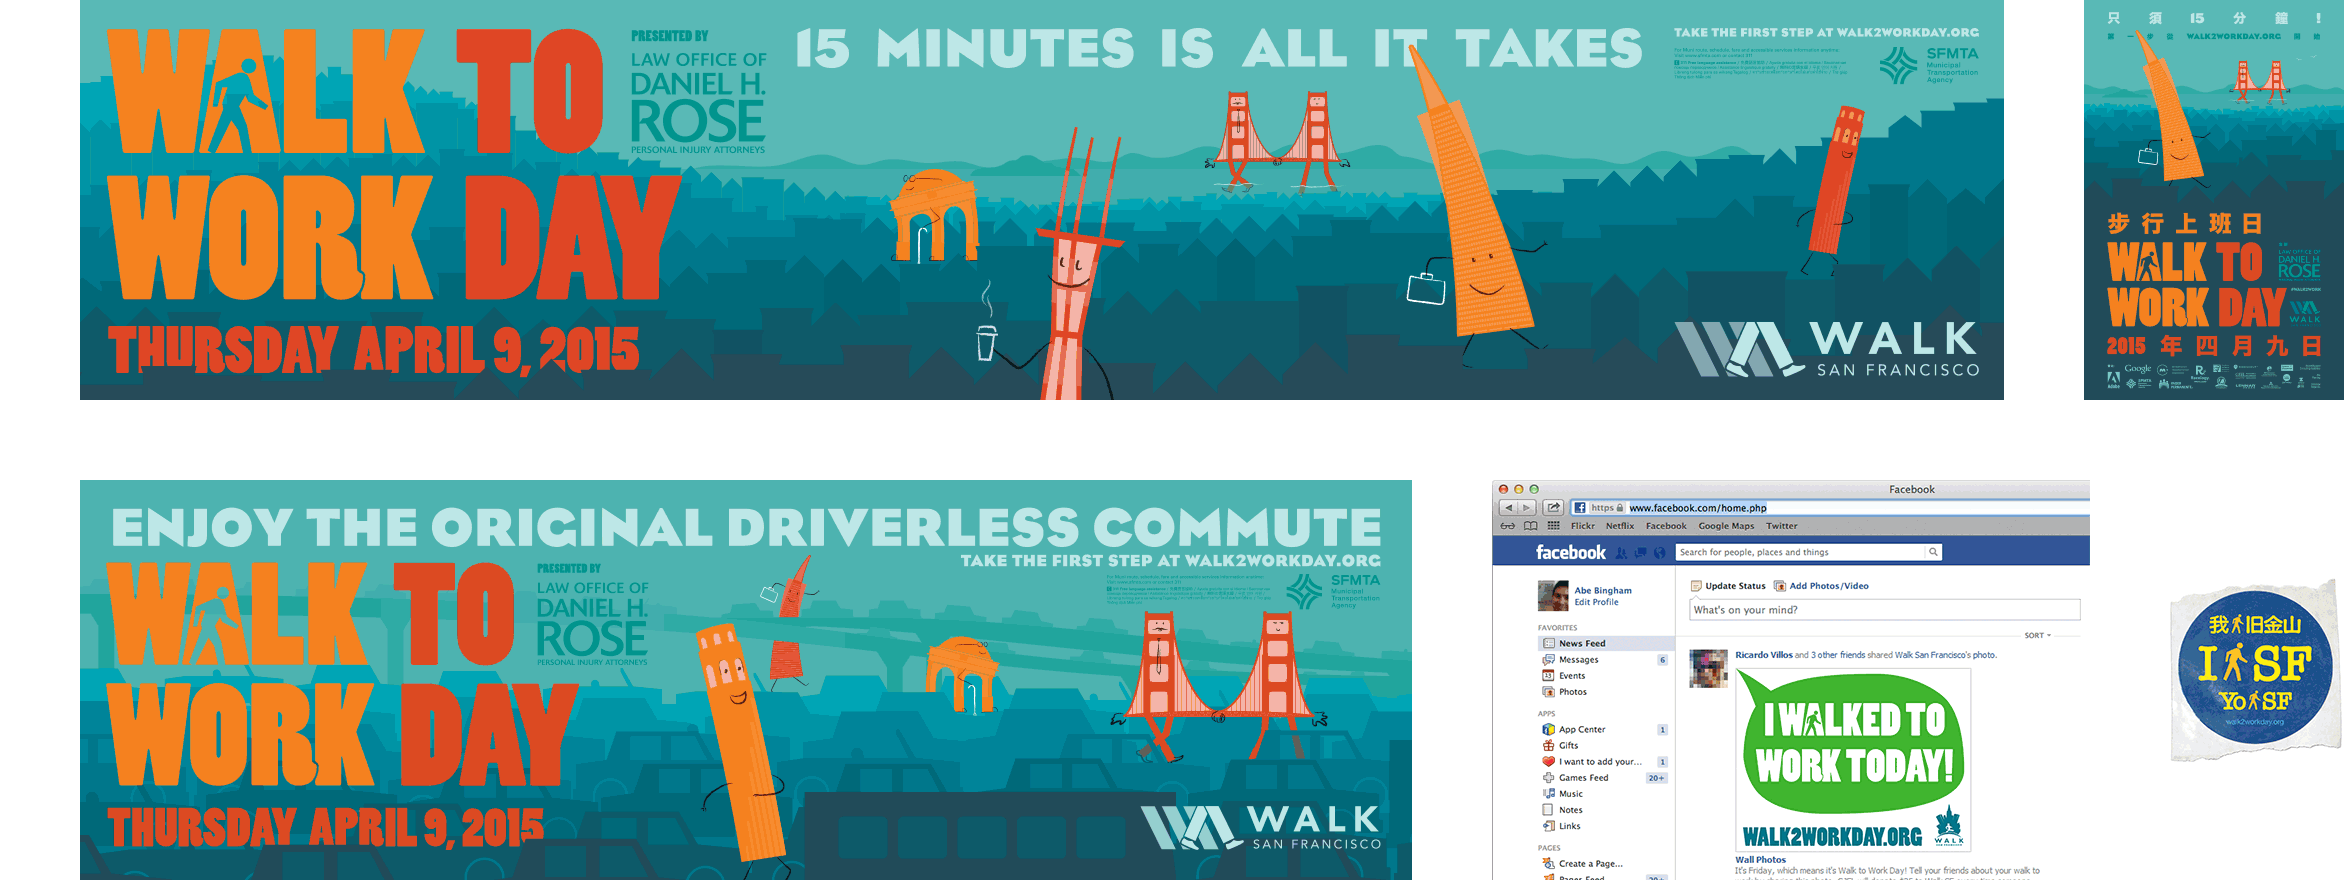 Walk To Work Day Bus Ads